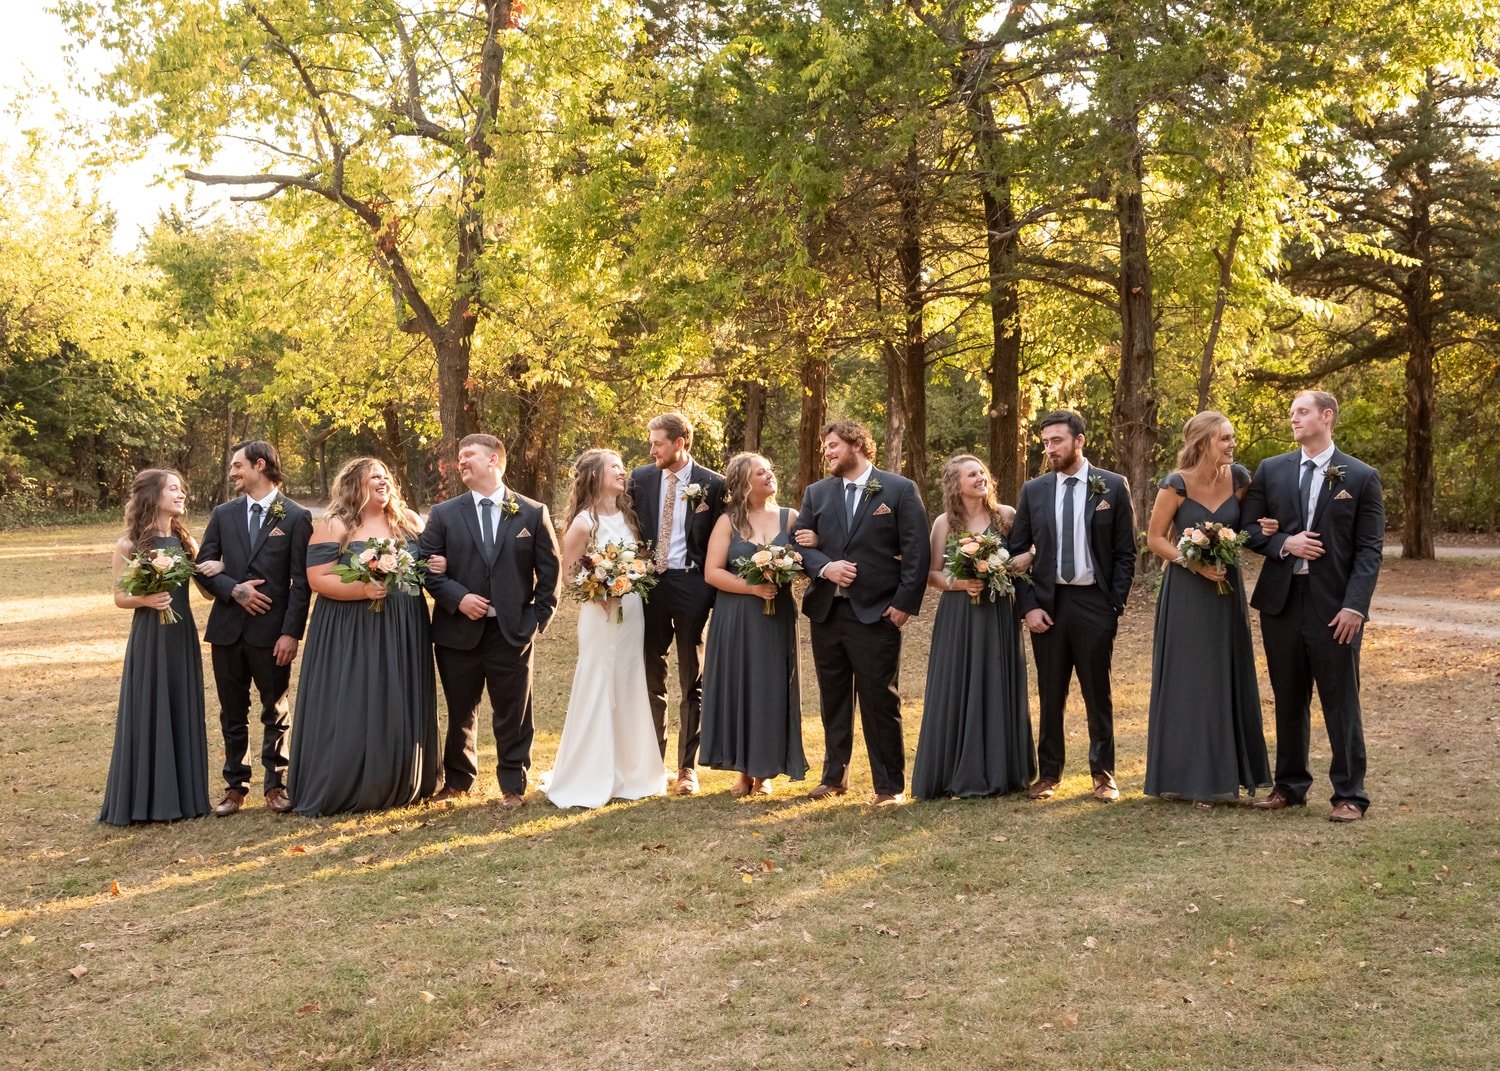 wedding-photographer-photography-oklahoma-city-beautiful-bride-groom-bridesmaids-groomsmen-bridal-party-chadandbriephotography.jpg